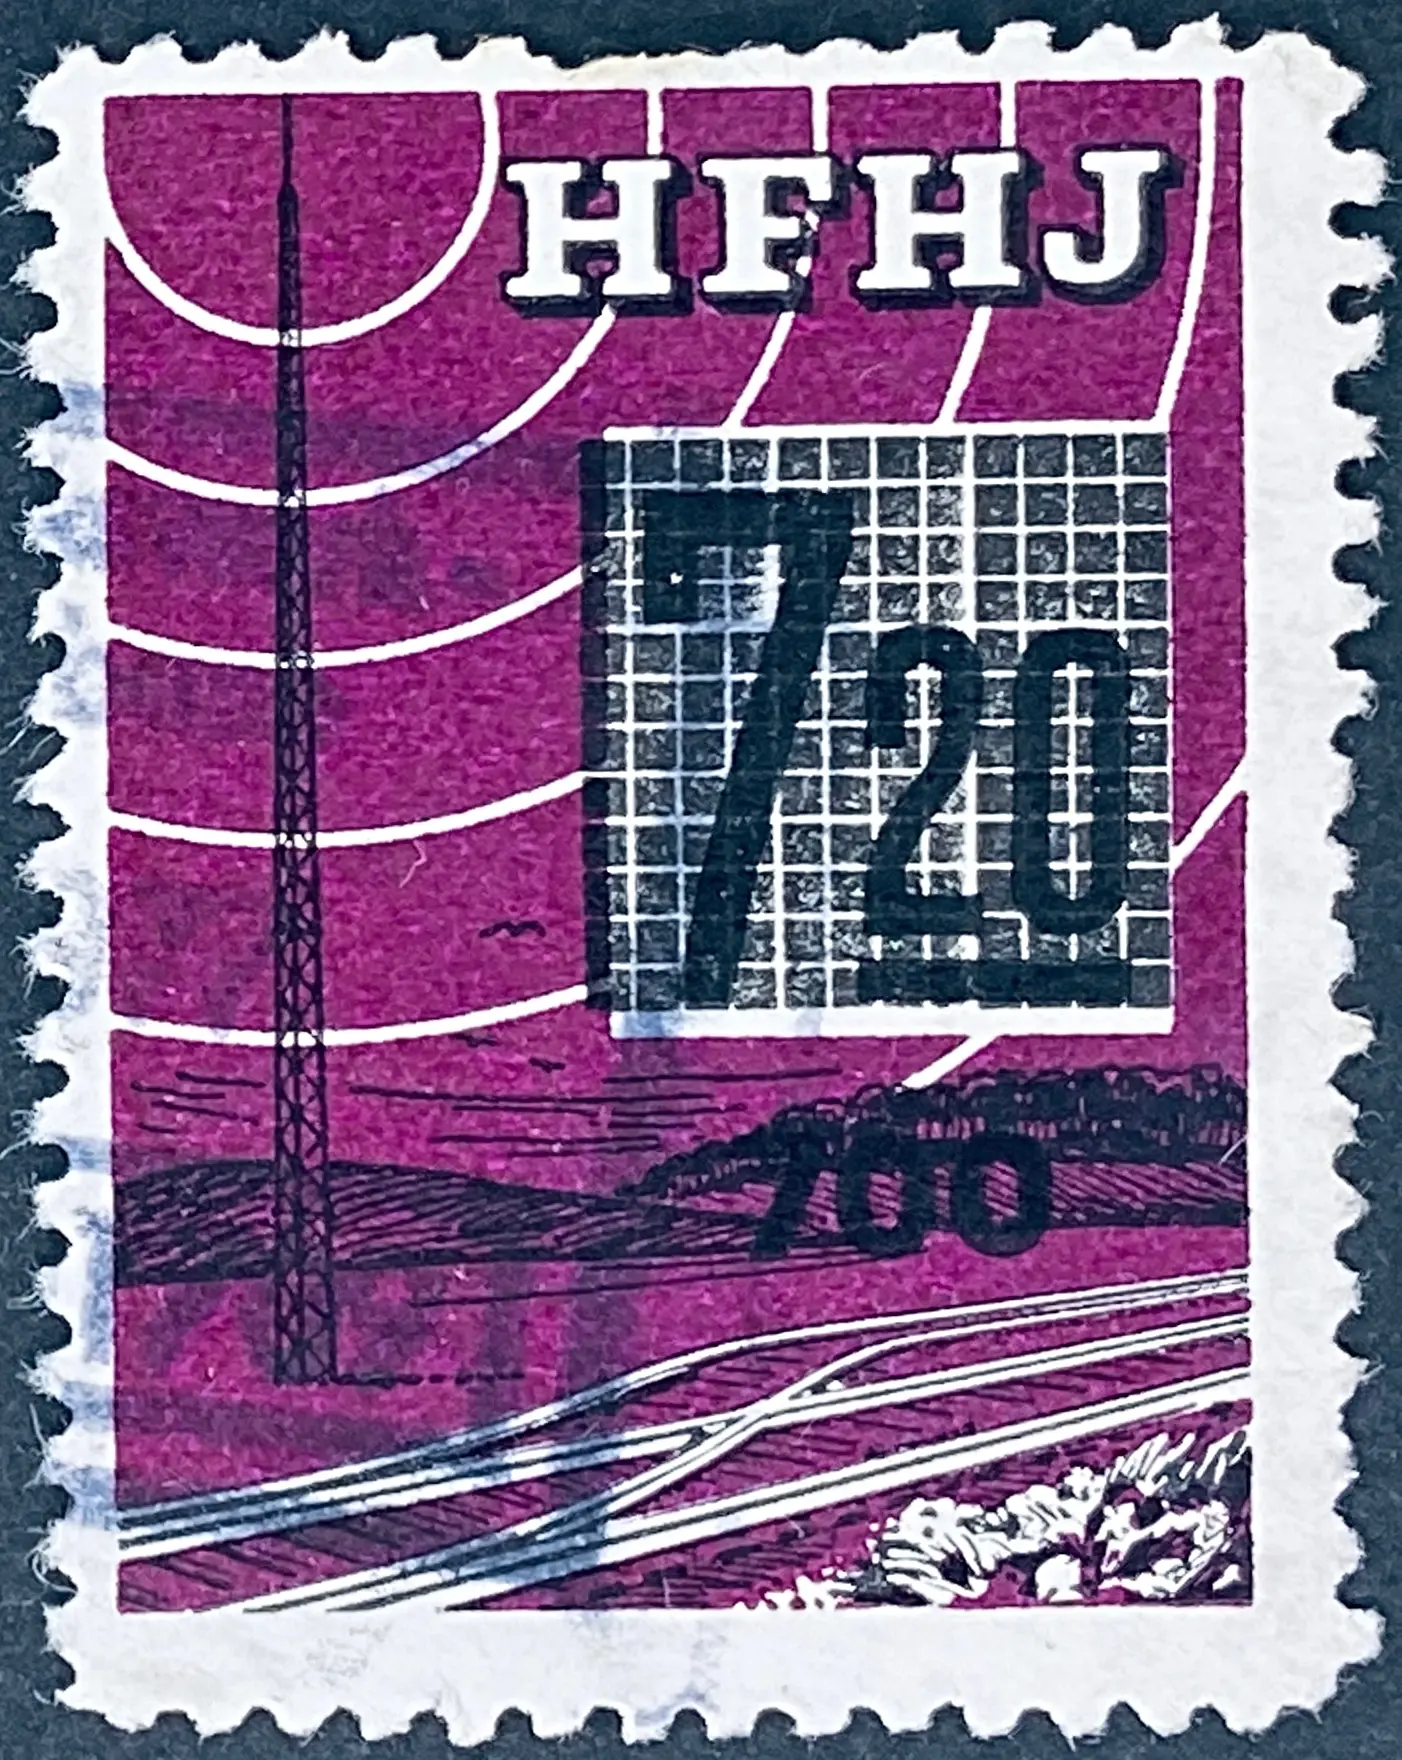 HFHJ 152 - Provisorium (overtryk) 700 Øre sort på 7<sup>20</sup> Kroner Motiv: Radiomast - Lilla.